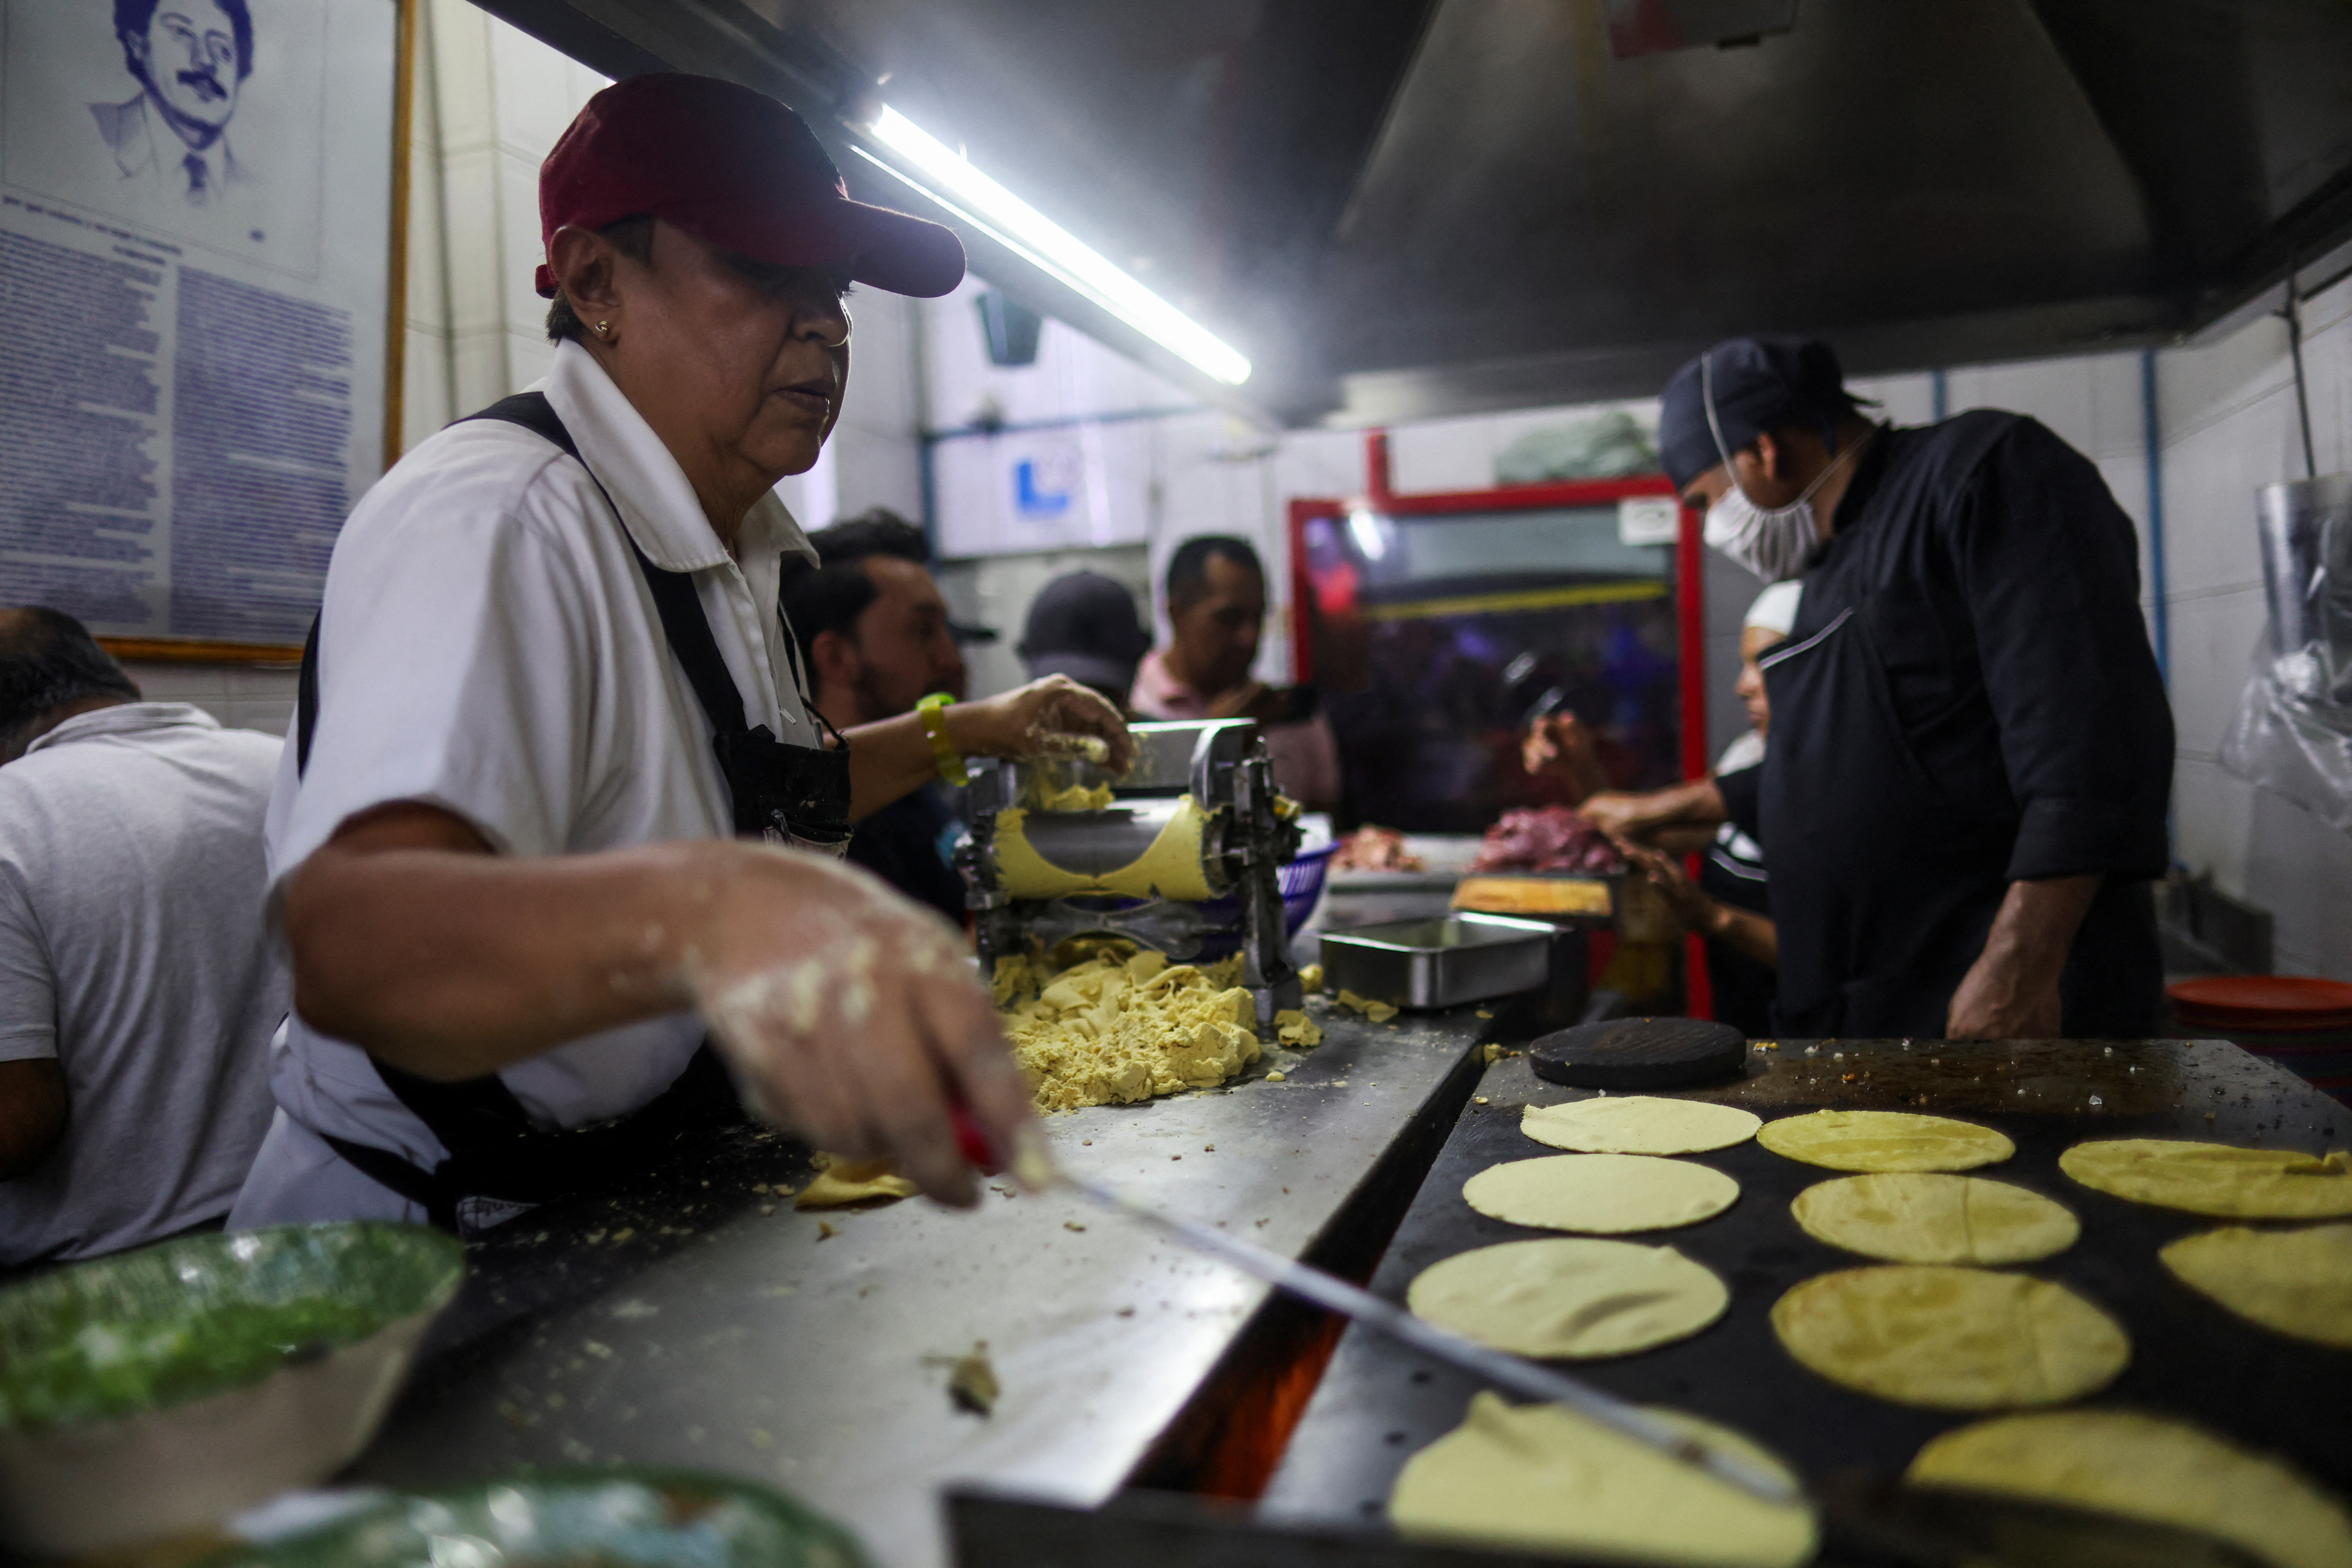 A woman makes tortillas for tacos at the Michelin-starred Taqueria El Califa de Leon, in Mexico City